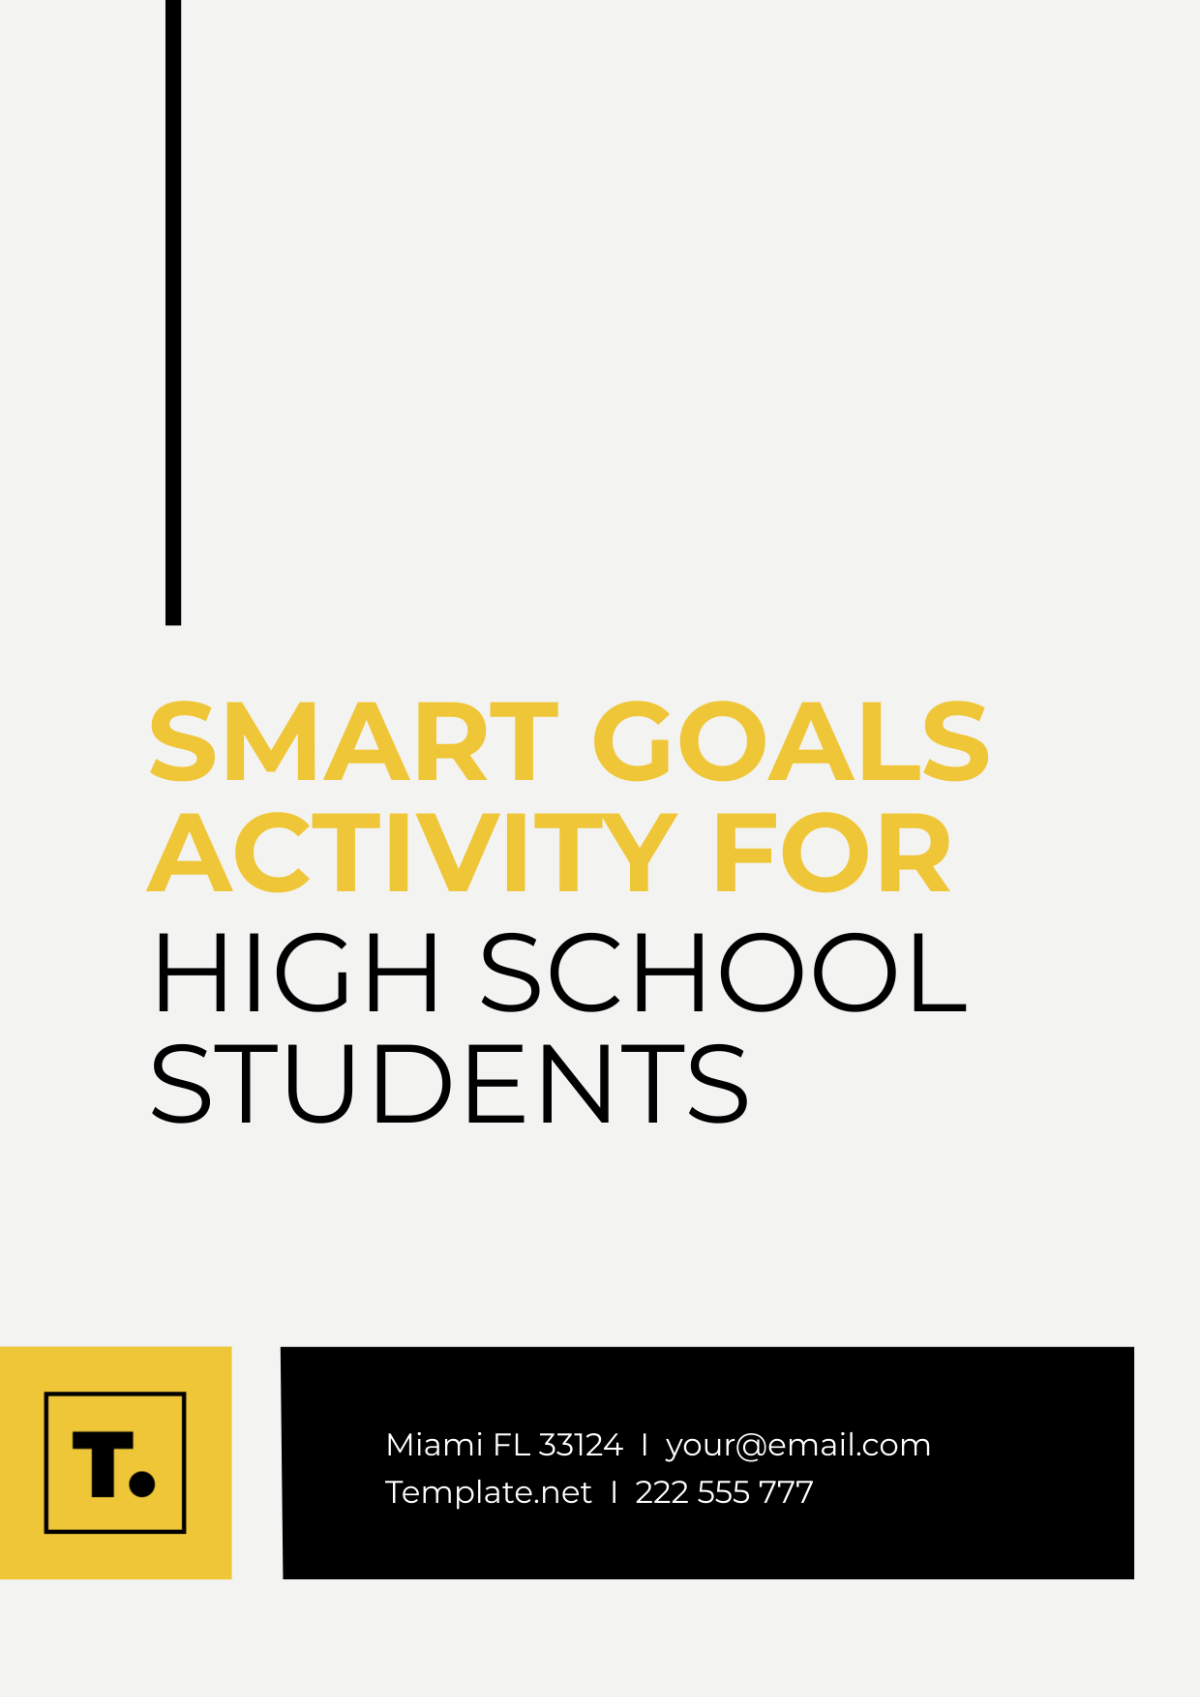 SMART Goals Activity For High School Students Template